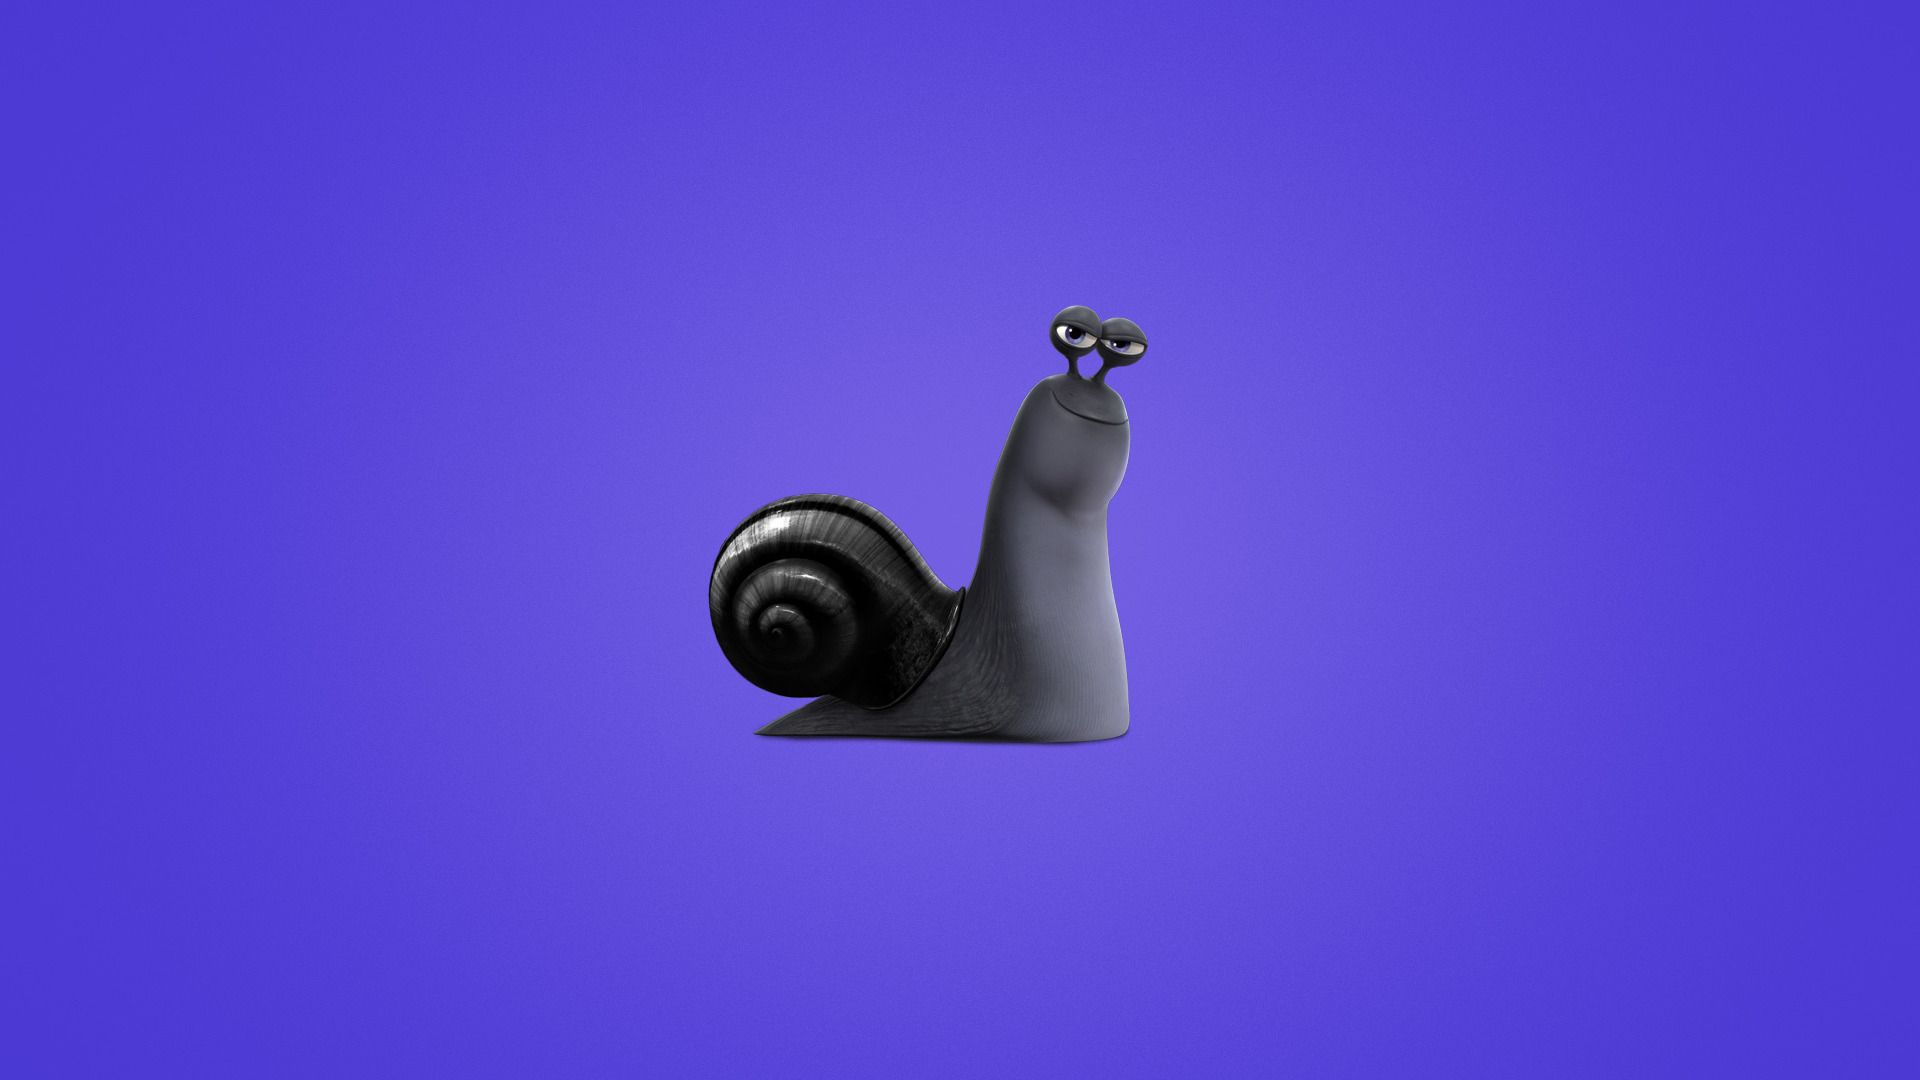 Download wallpaper snail, minimalism, Turbo, purple background, Turbo, snail, section minimalism in resolution 1920x1080